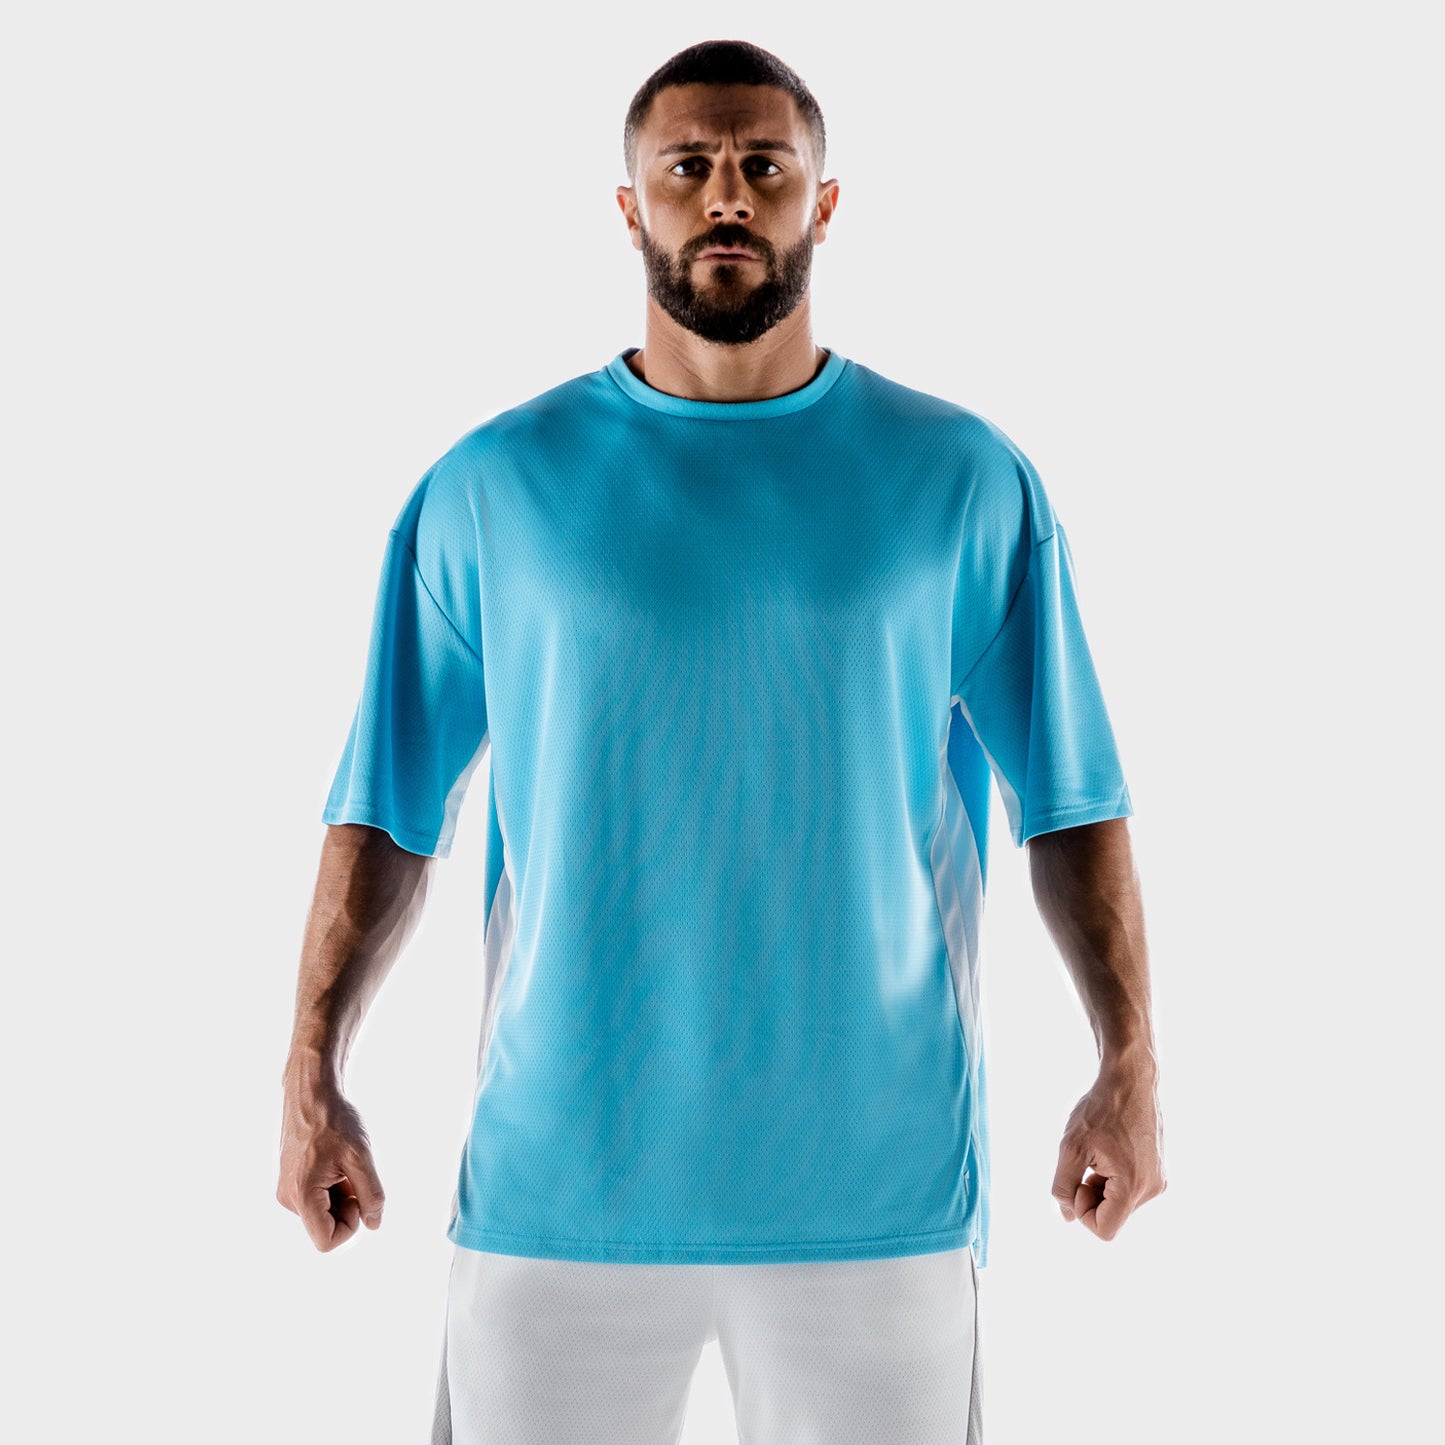 squatwolf-gym-wear-hybrid-2-0-oversize-tee-blue-workout-shirts-for-men